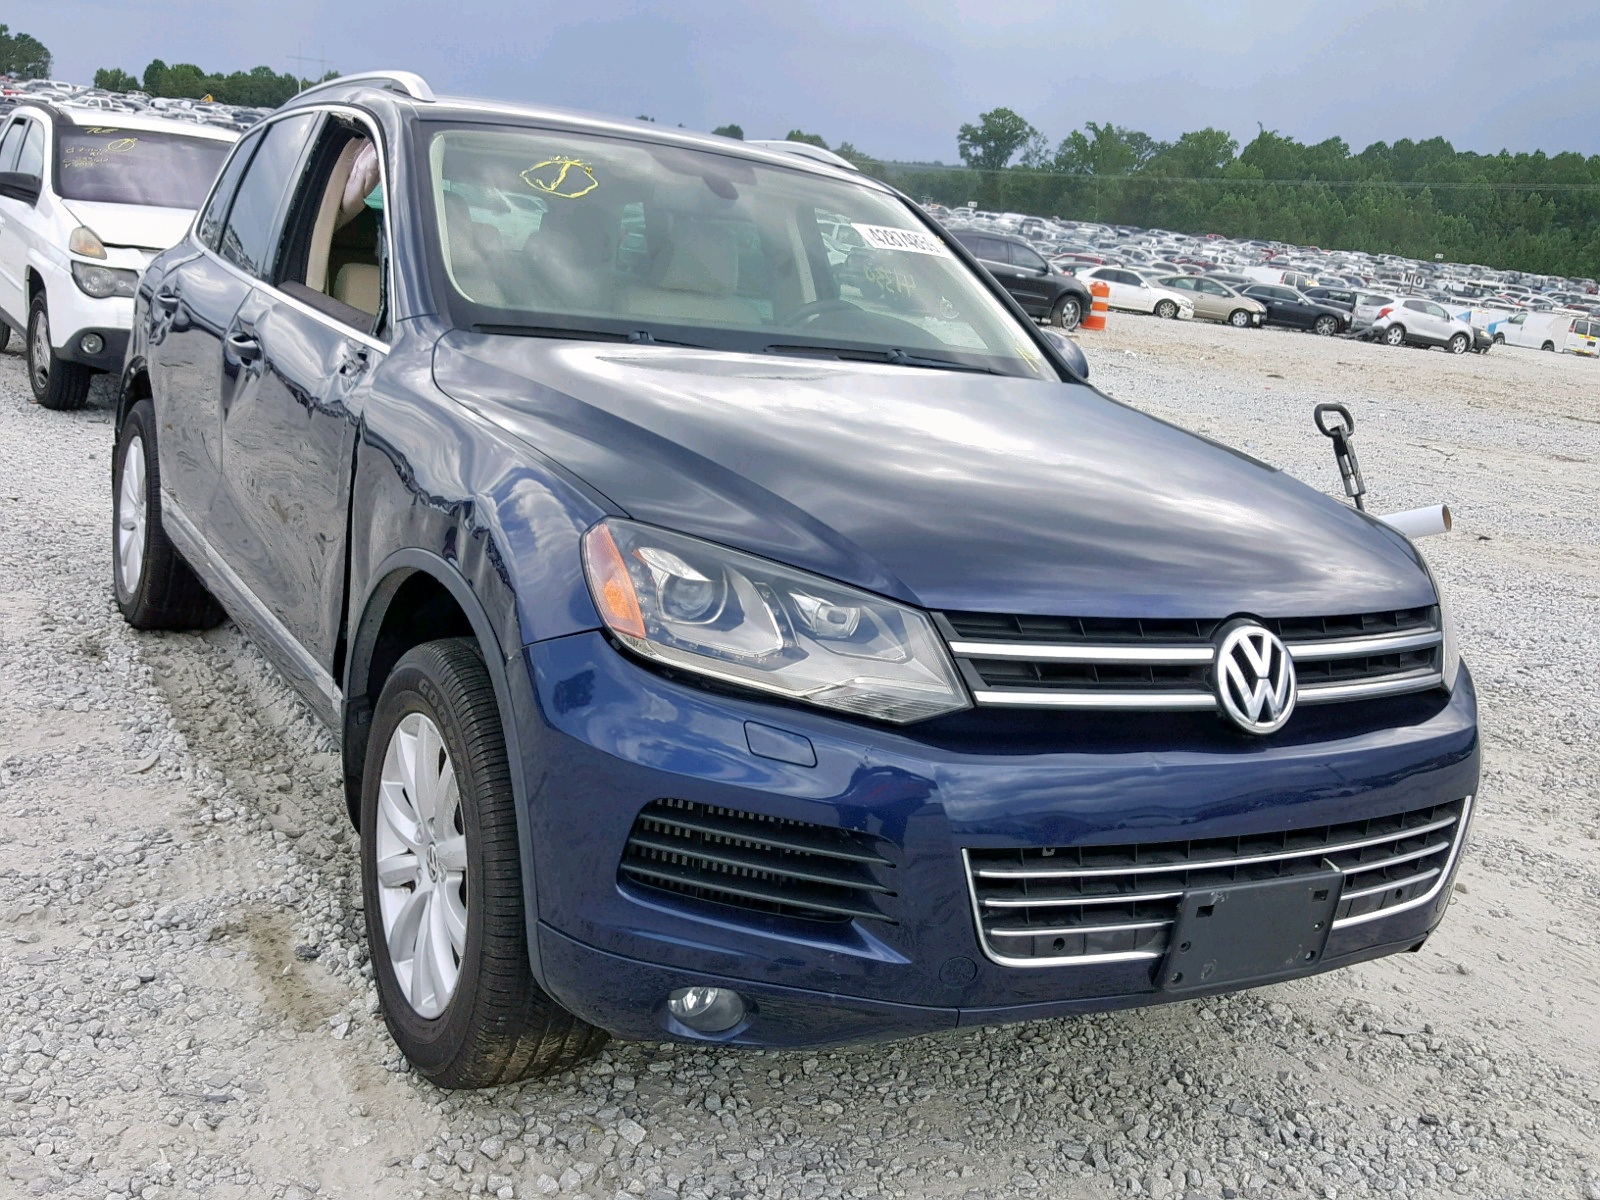 Volkswagen Touareg v6 TDI. Туарег Фольксваген 2012 дизель. Туарег v12 6.0. Touareg v10 5.0 TDI. Купить туарег дизель россия